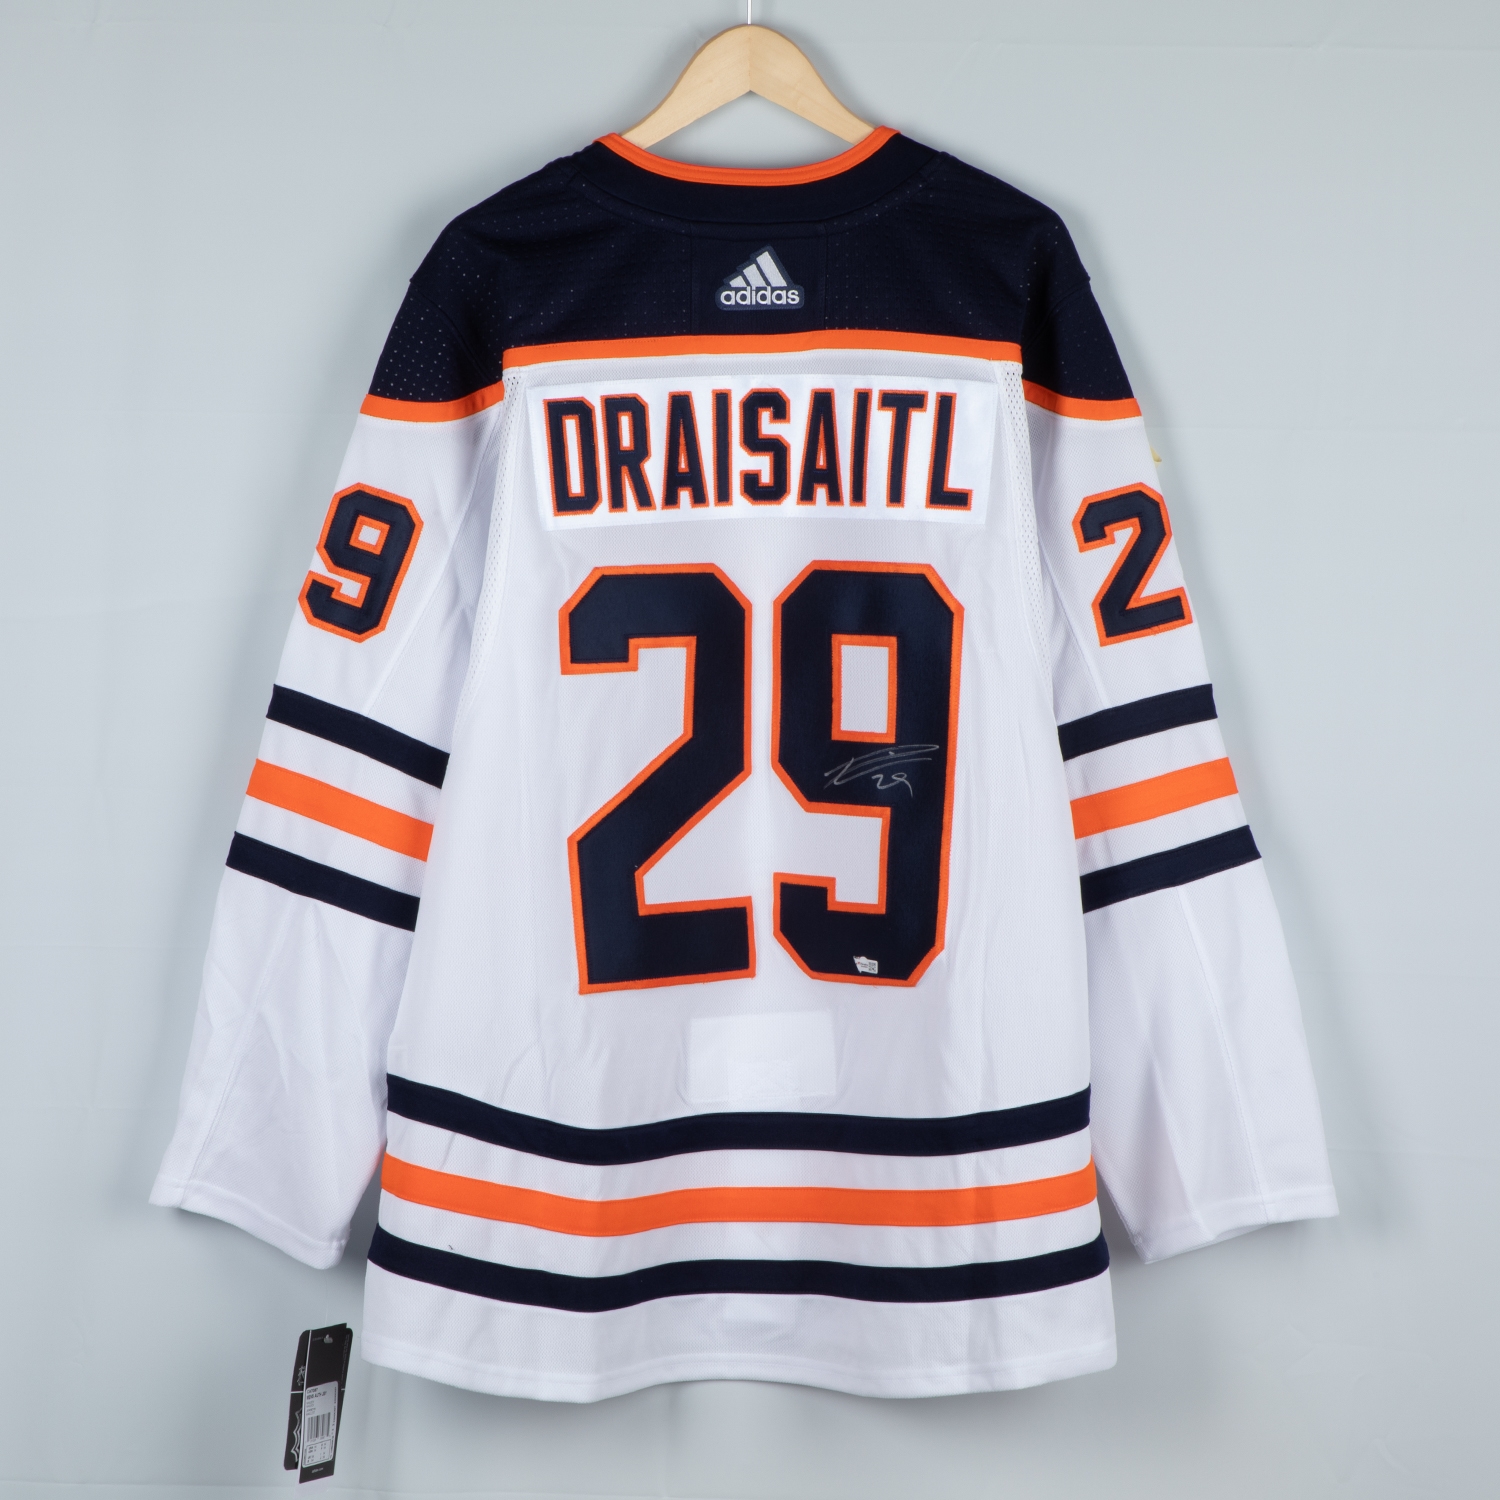 Leon Draisaitl Autographed Edmonton Oilers Adidas Jersey